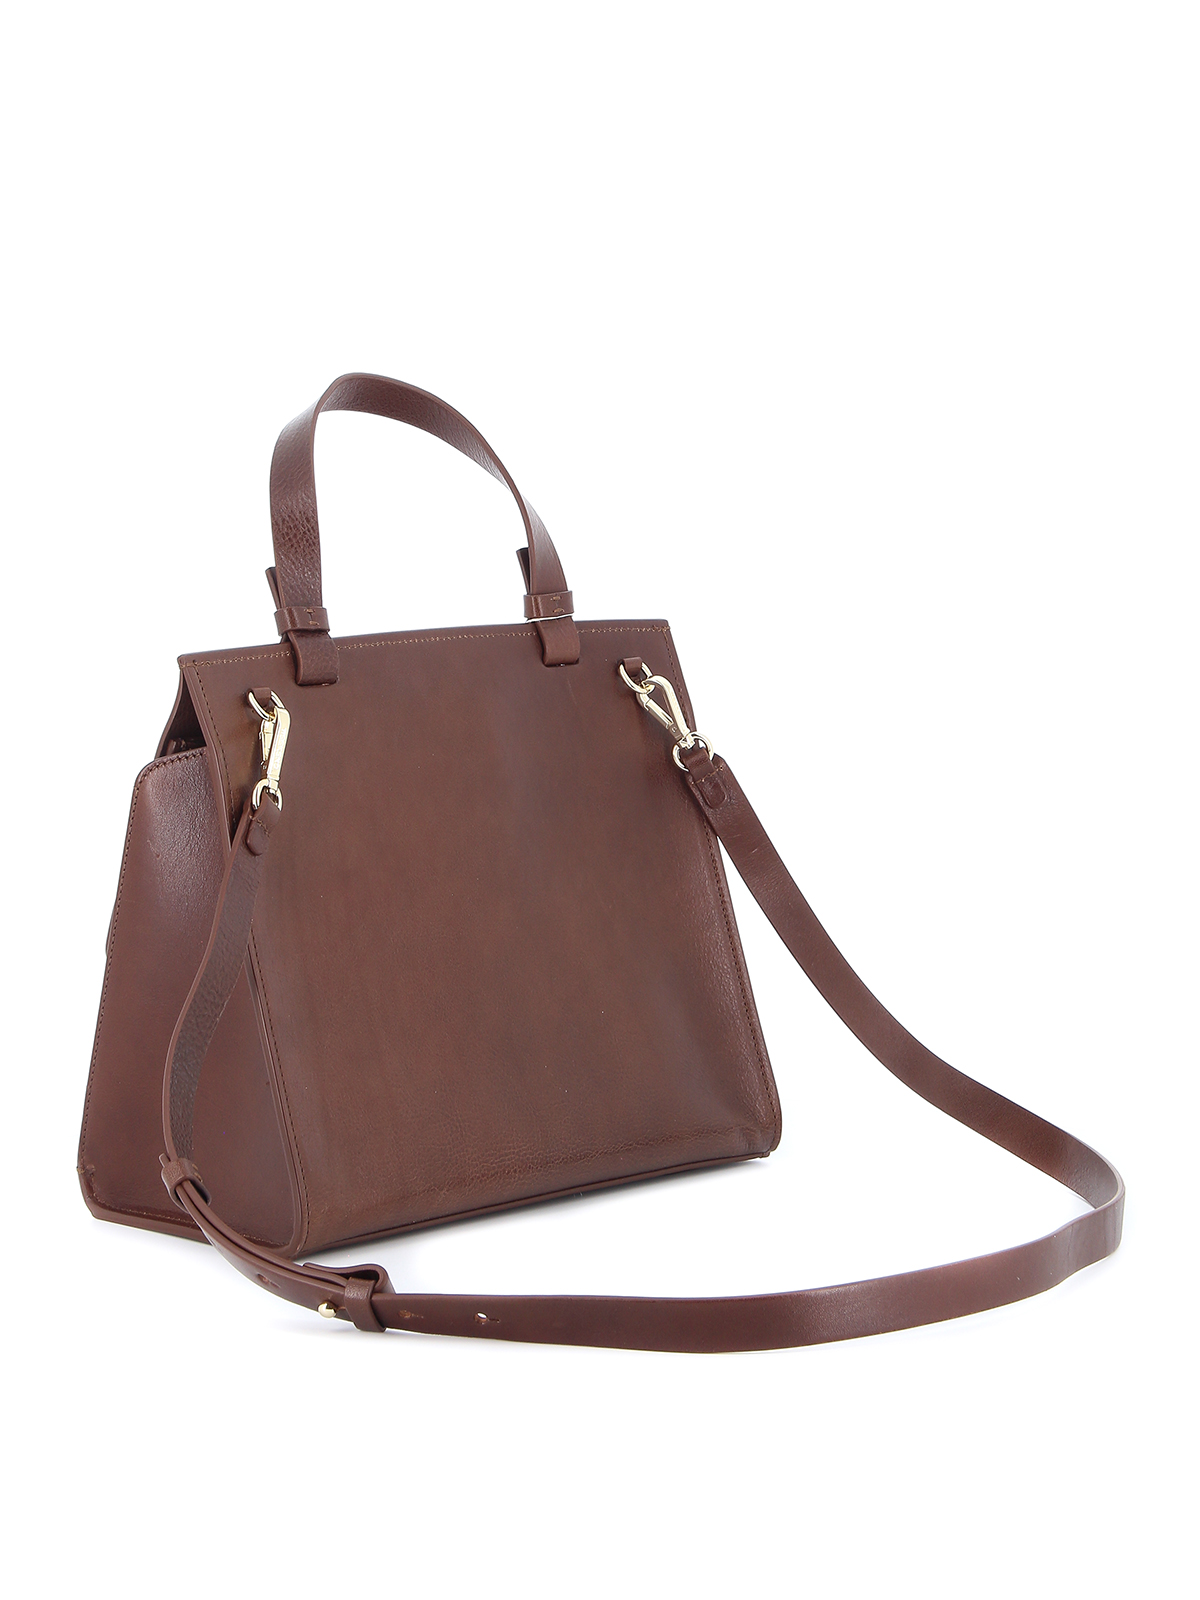 Totes bags Weekend Max Mara - Leather handbag - 551111026002 | iKRIX.com